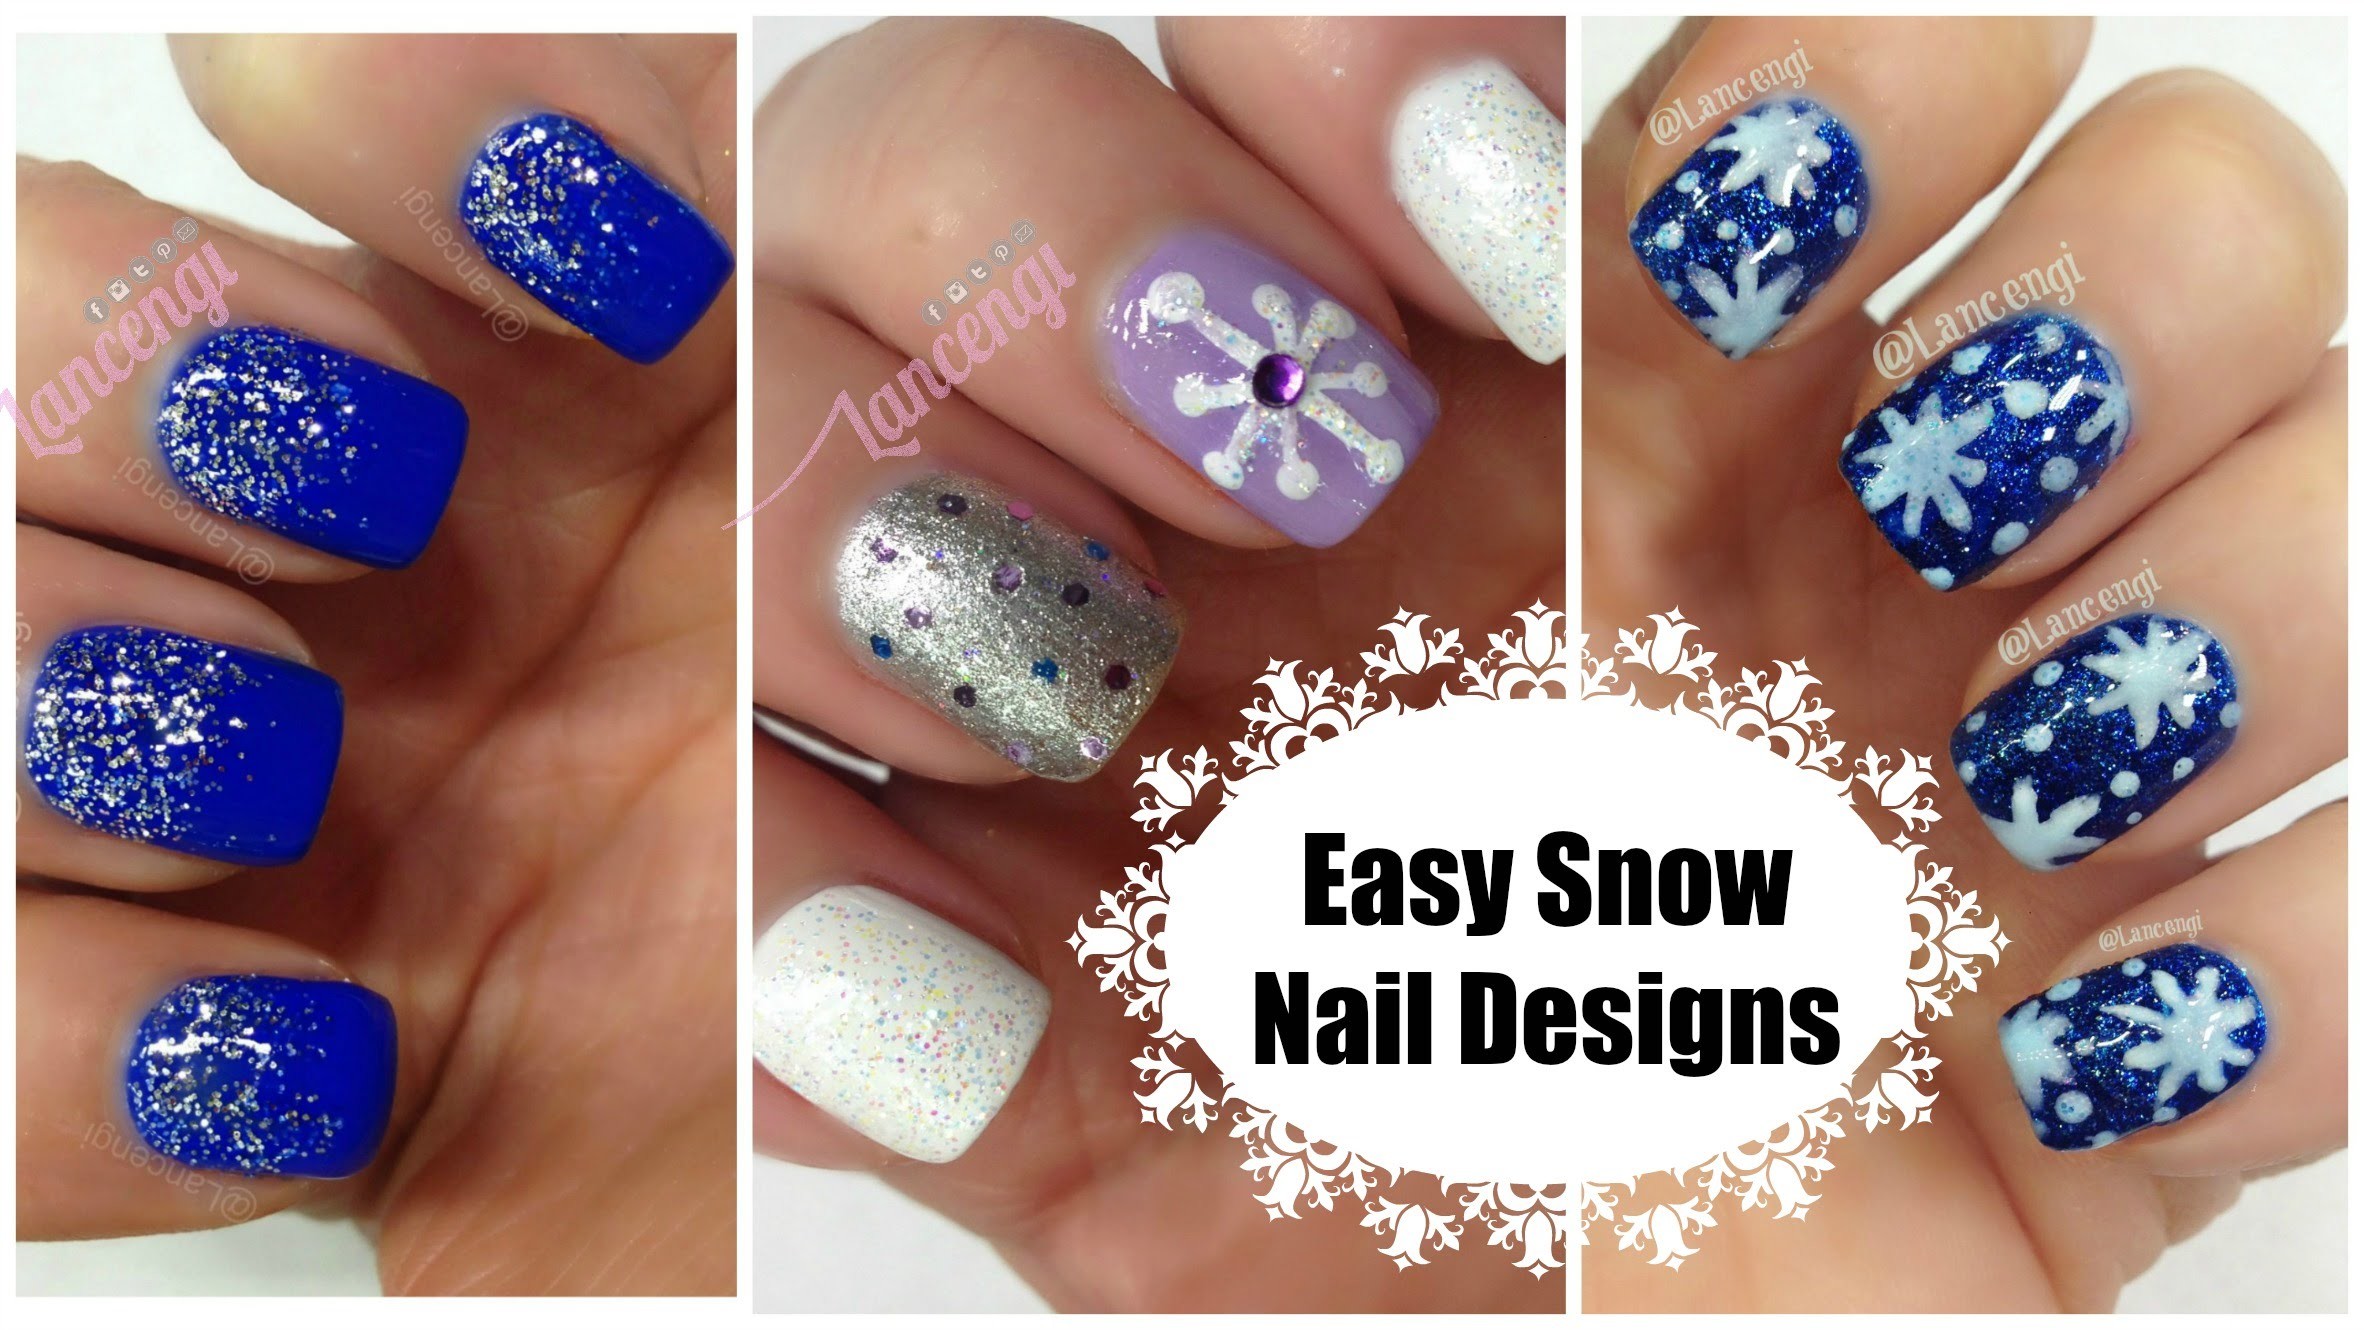 4. "Minimalist Winter Nail Designs for a Sleek Look" - wide 7